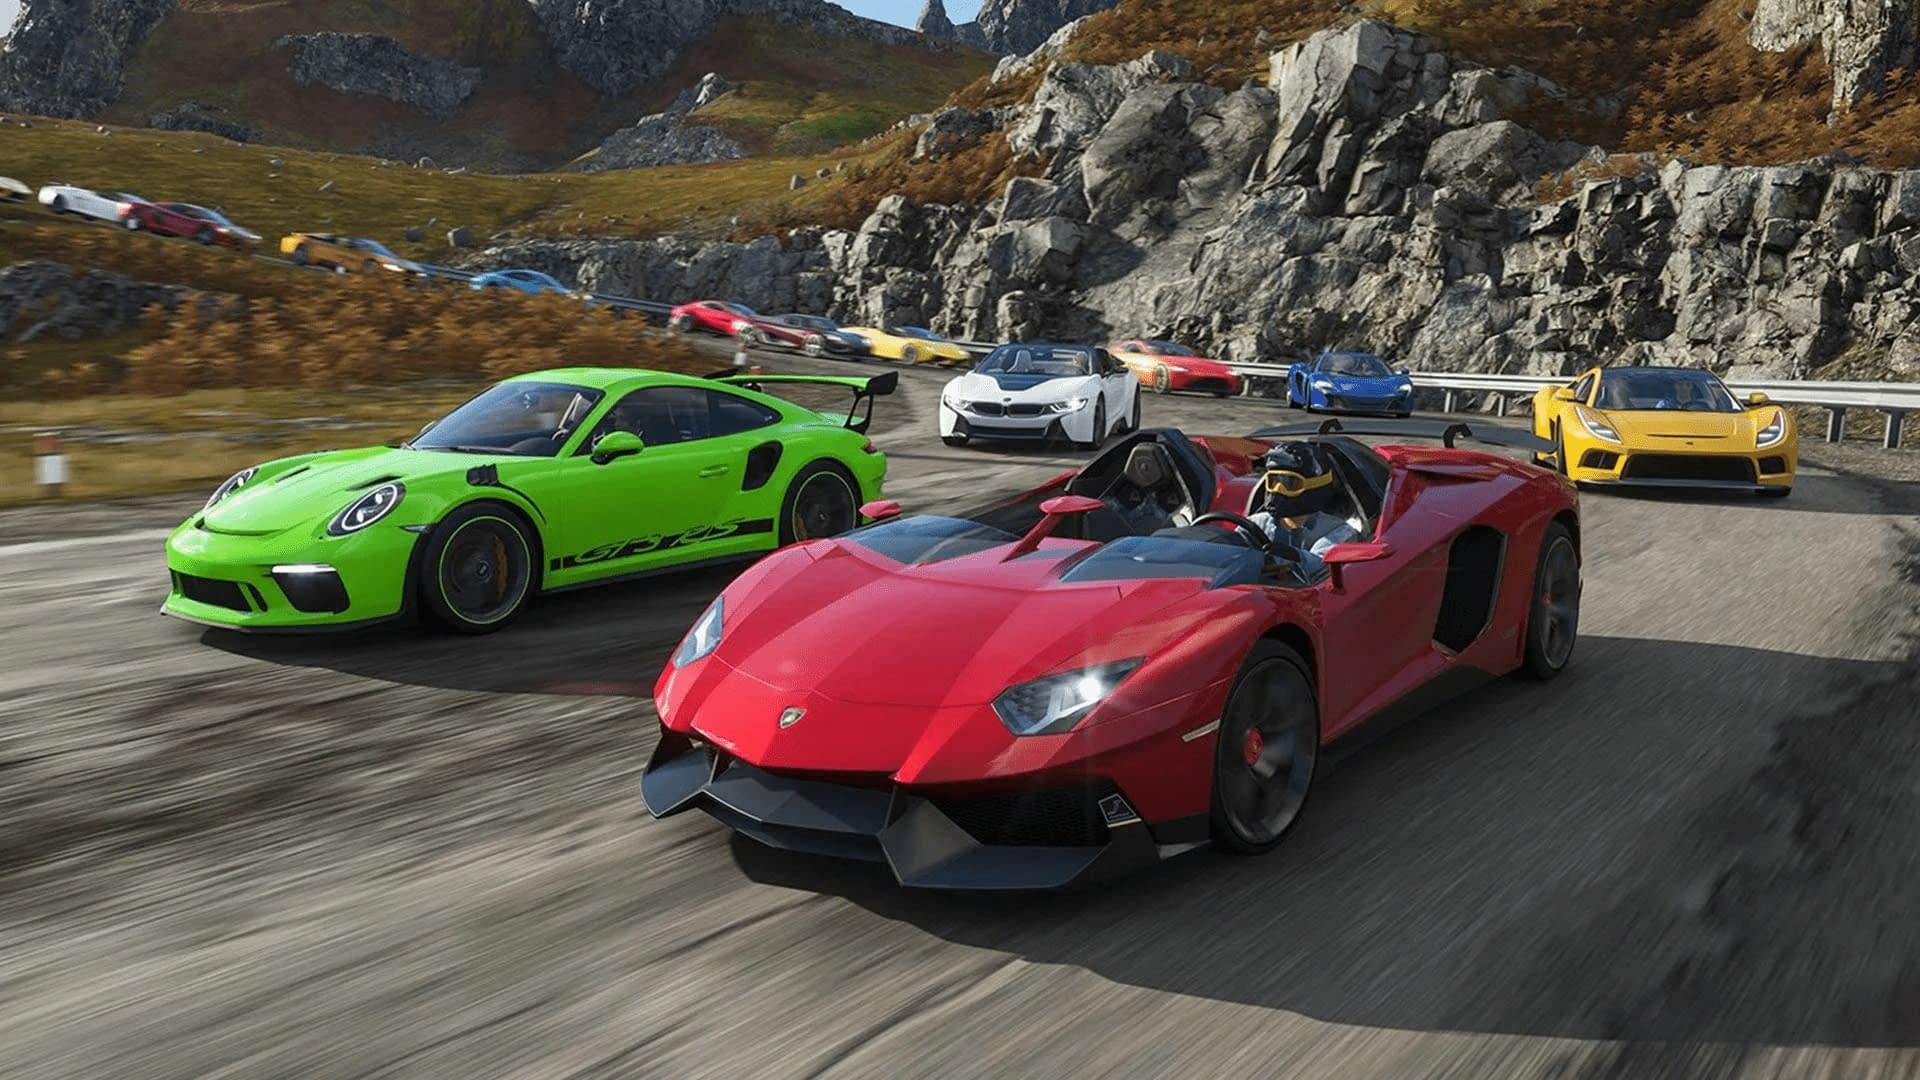 Forza Motorsport’s play screenshot leaked